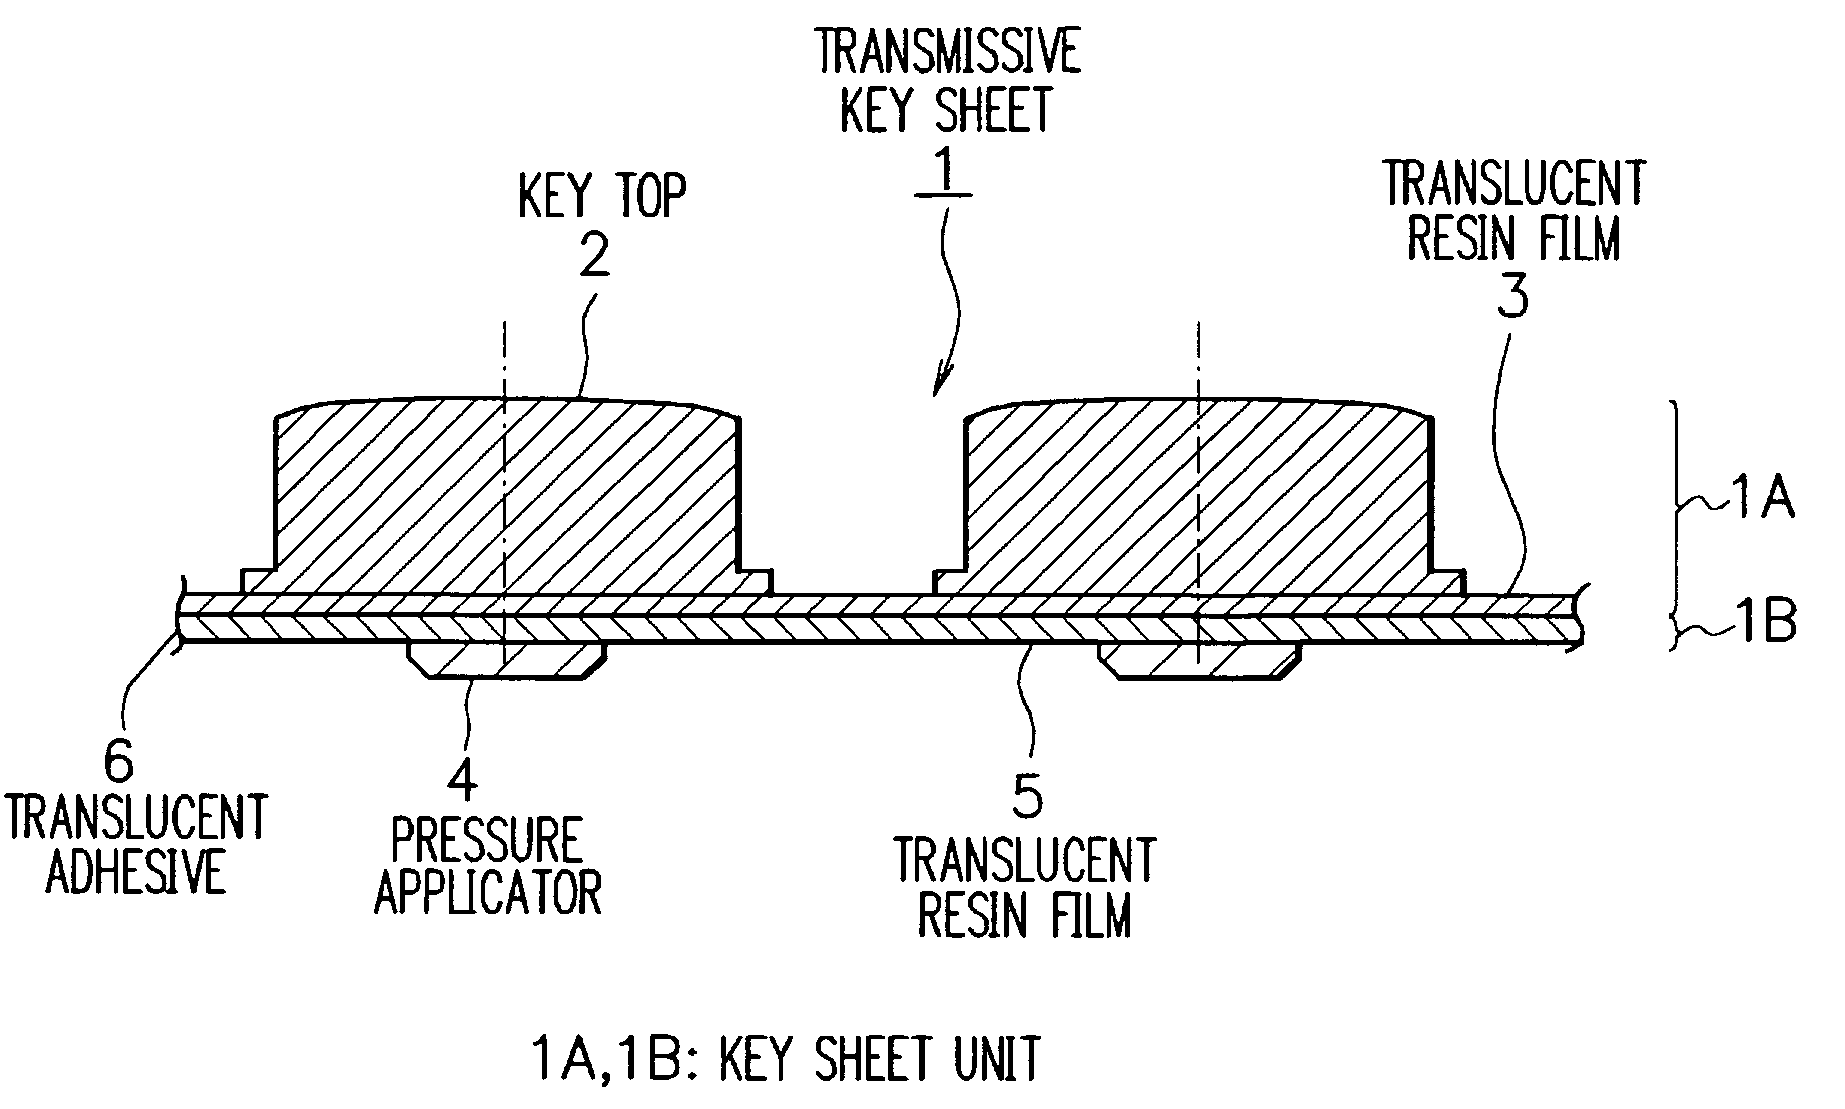 Transmissive key sheet, input keys using transmissive key sheet and electronic equipment with input keys